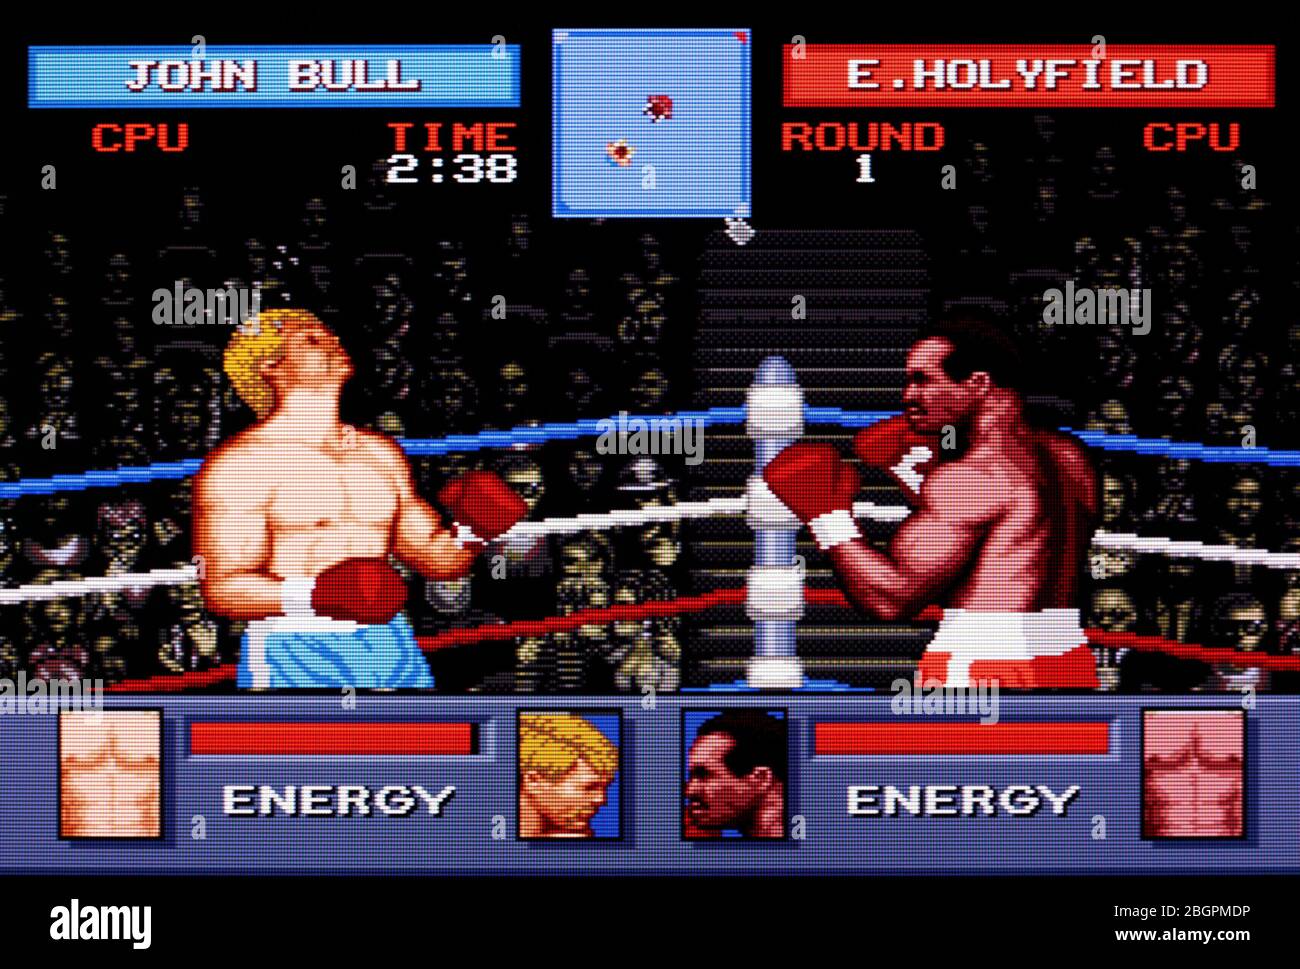 vander Holyfield's Real Deal Boxing - Sega Genesis Mega Drive - Editorial use only Stock Photo